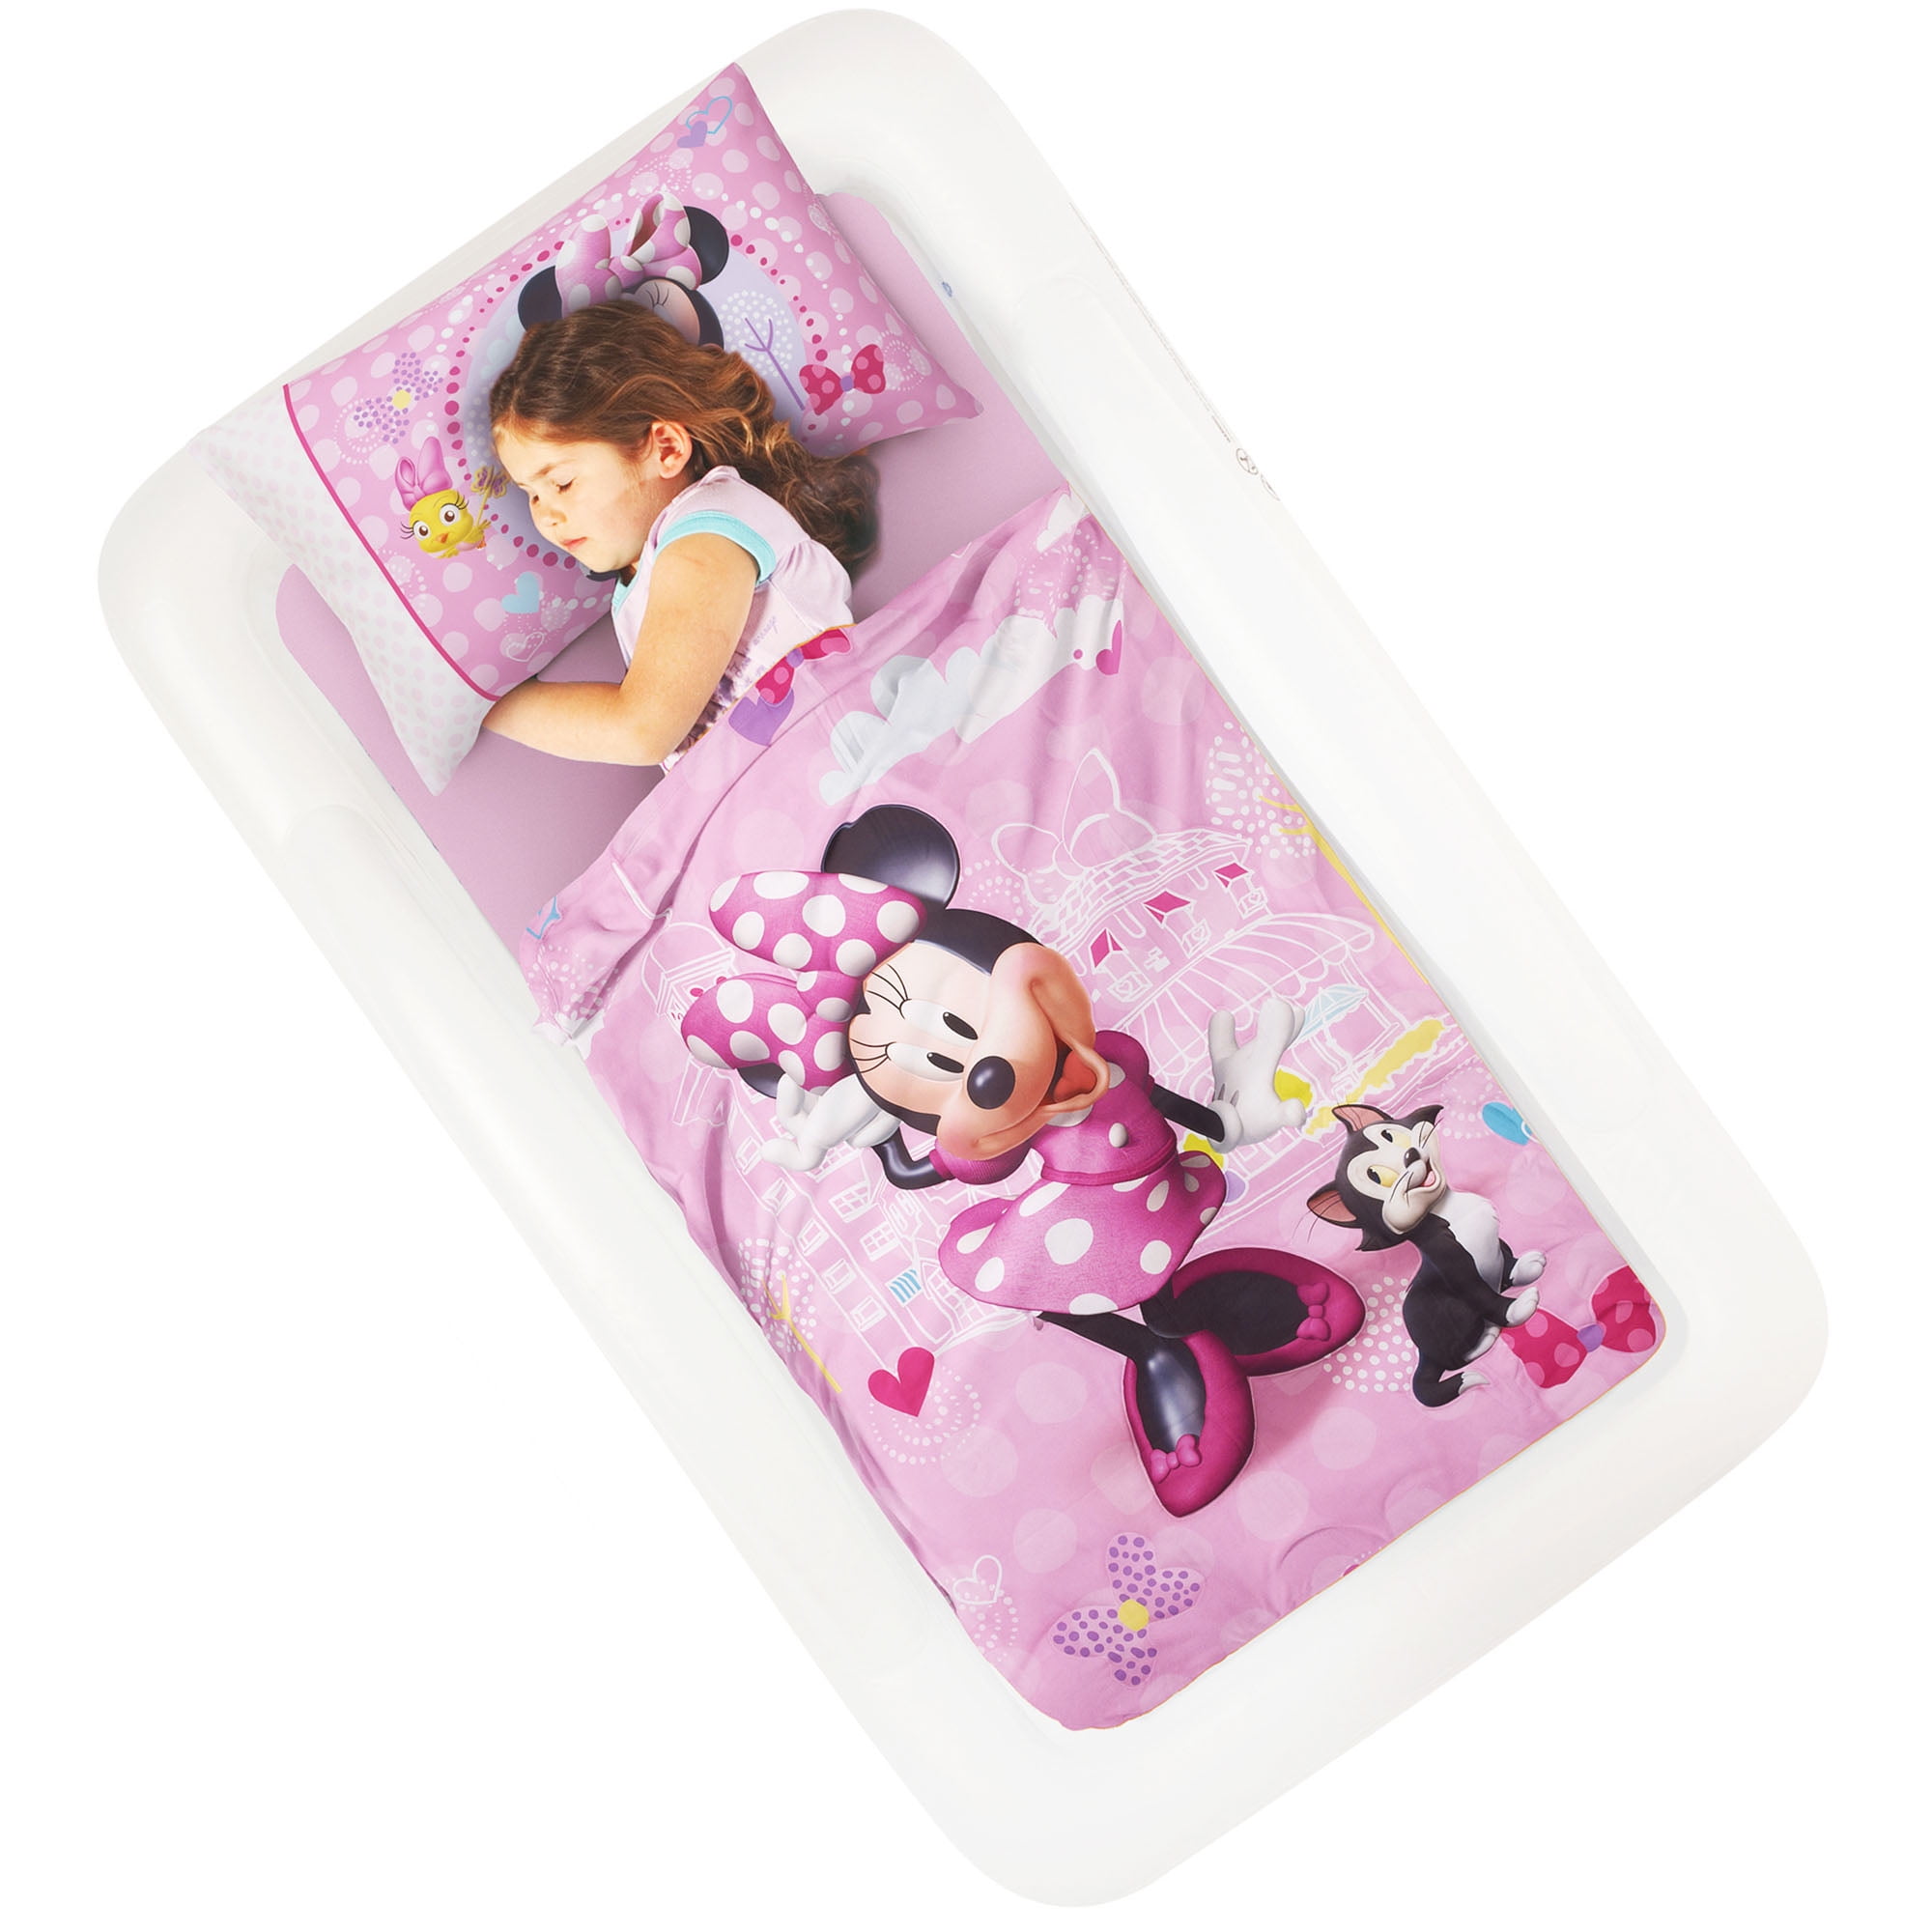 Airdorable Airblown-Minnie w/Banner-Disney - Bed Bath & Beyond - 34933160